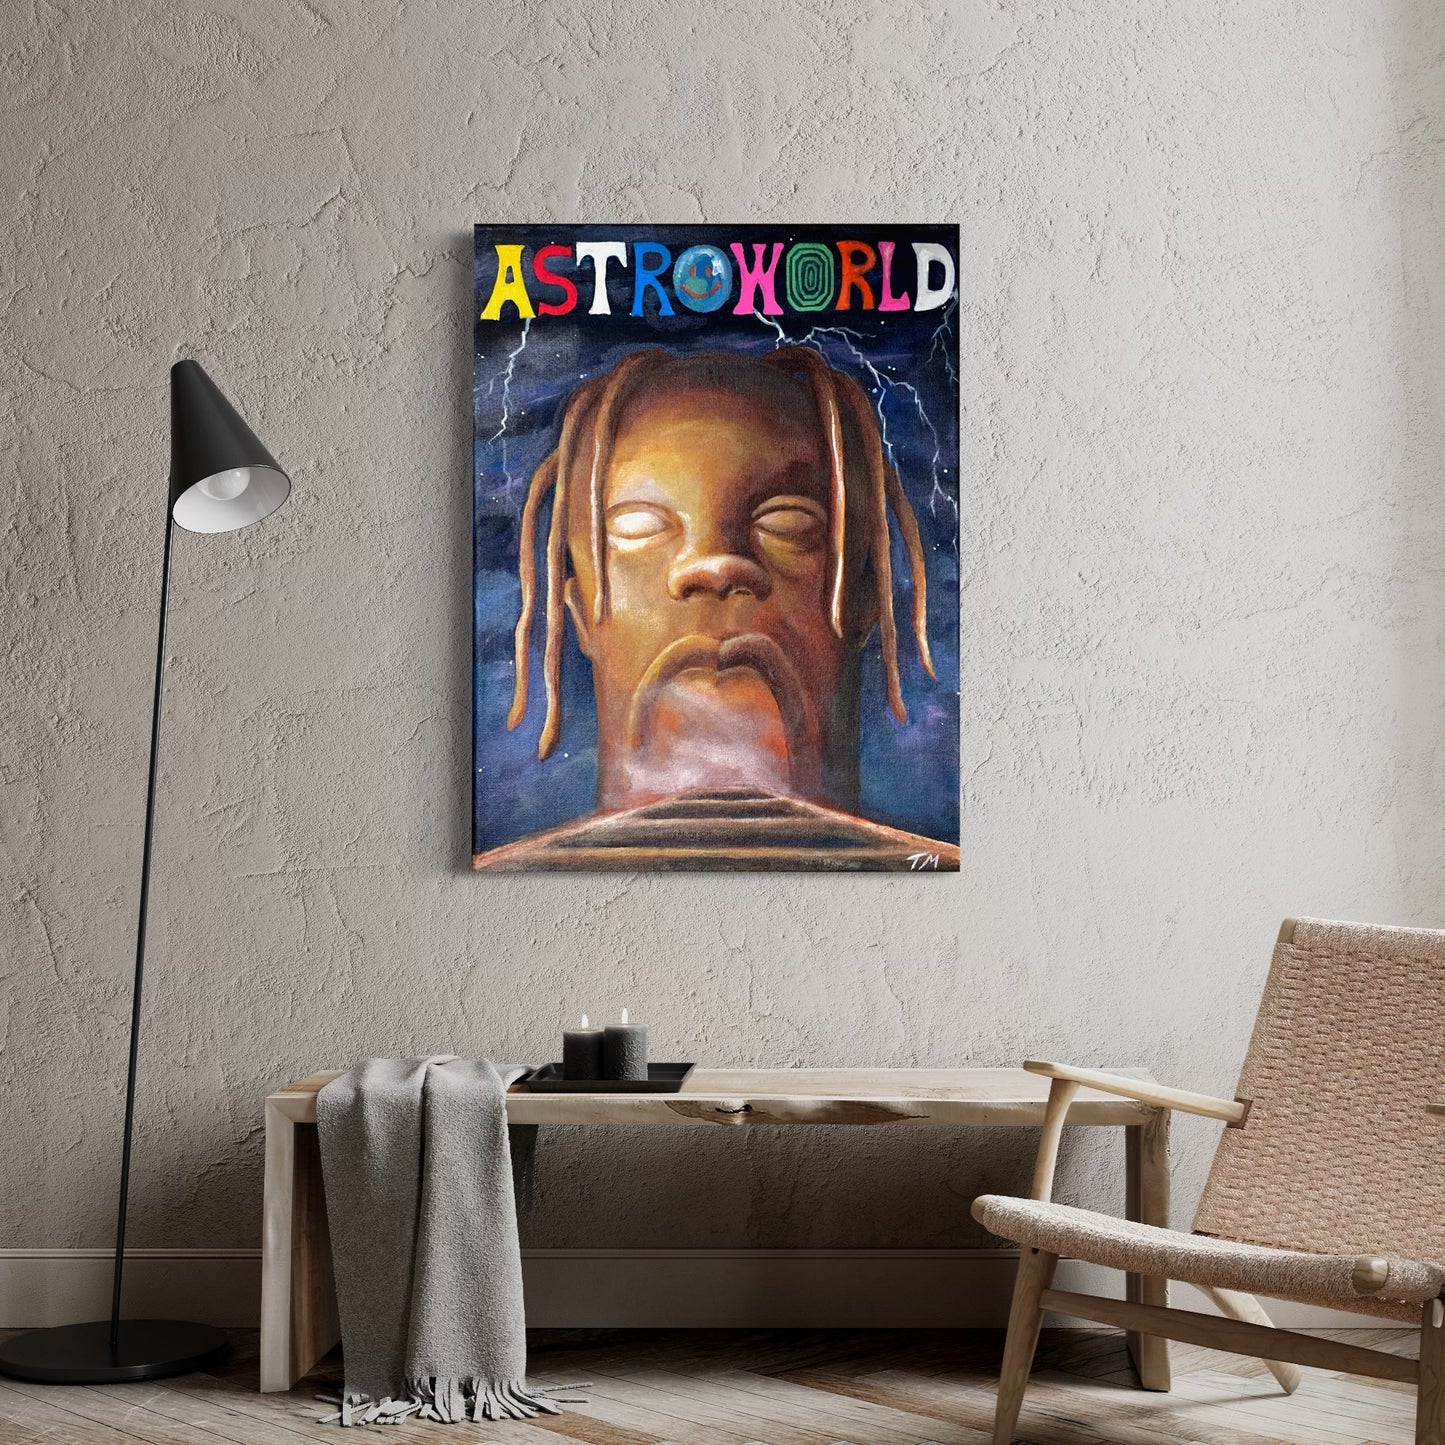 Astroworld - Canvas